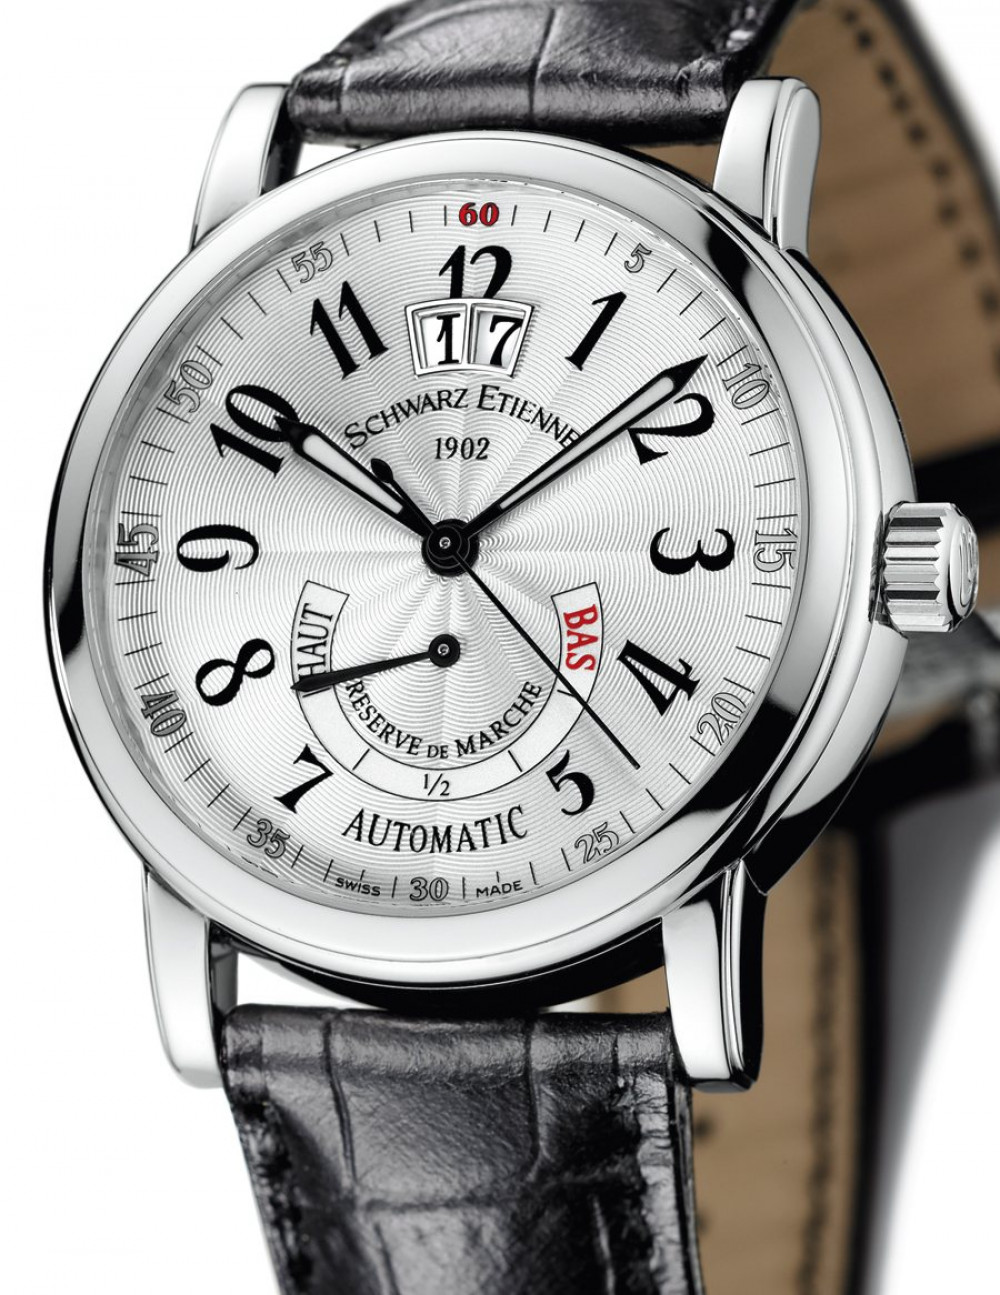 Zegarek firmy Schwarz Etienne, model Gangreserve